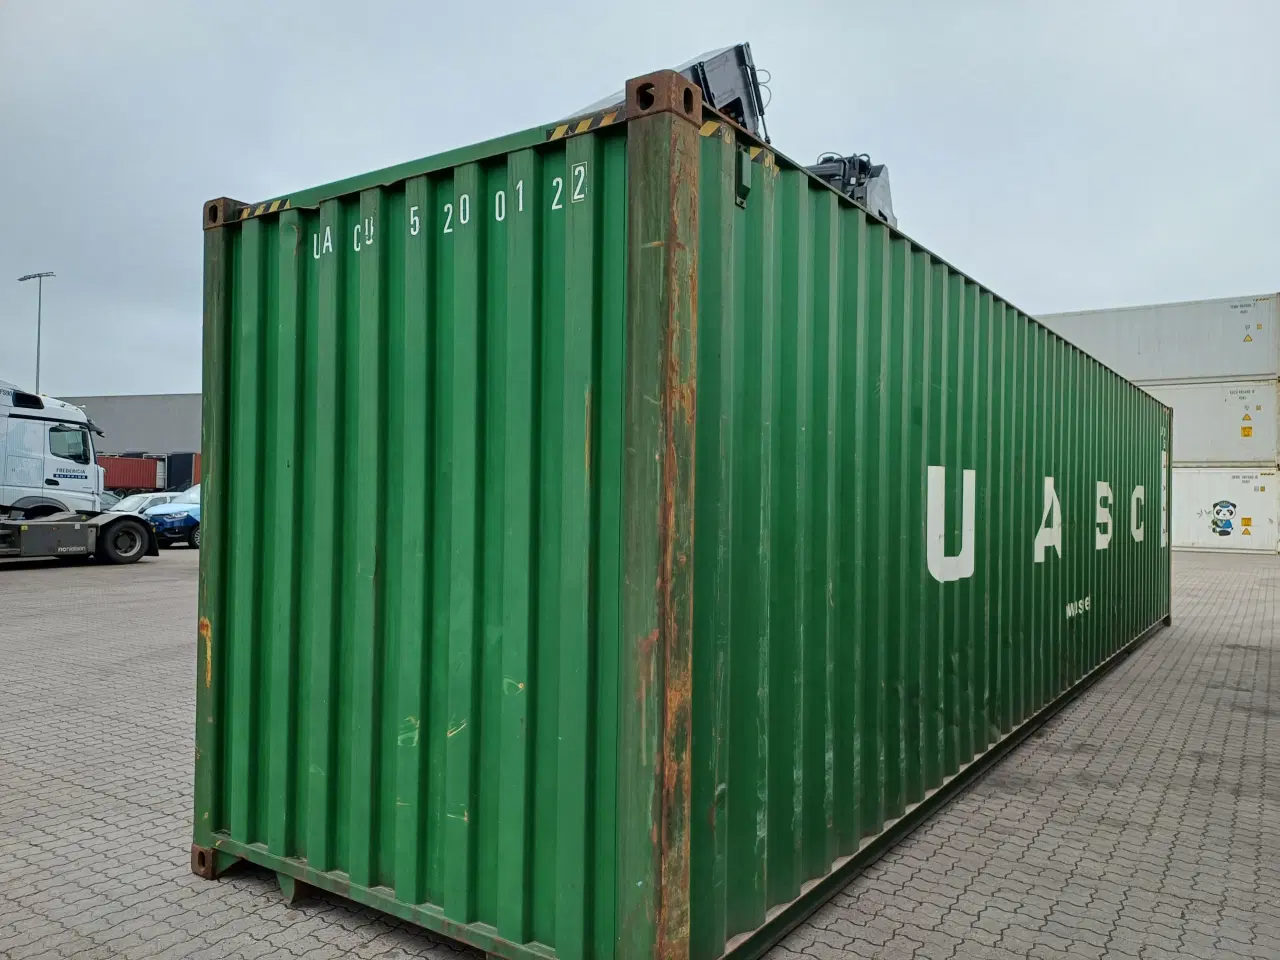 Billede 3 - 40 fods HC Container - ID: UACU 520012-2